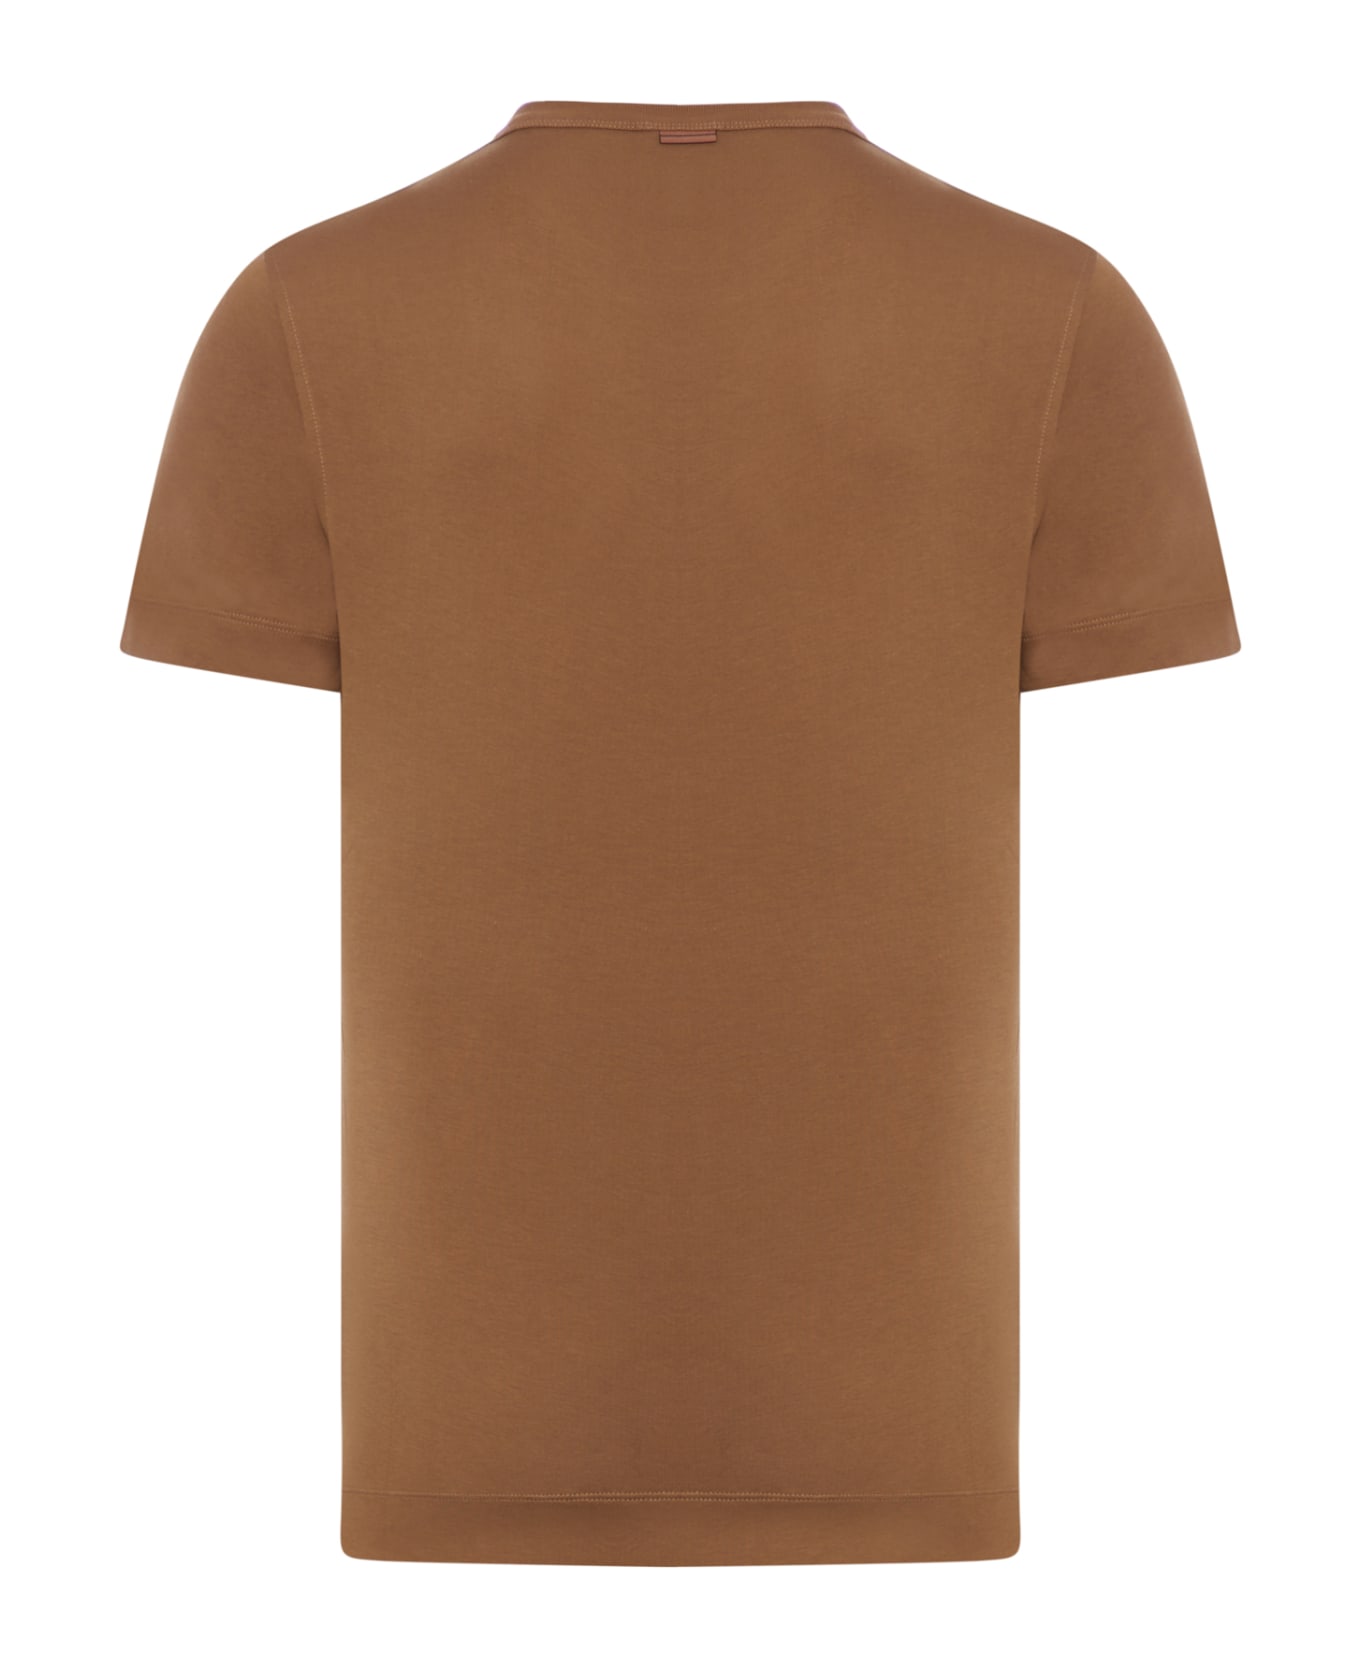 Zegna Tshirt - Medium Brown